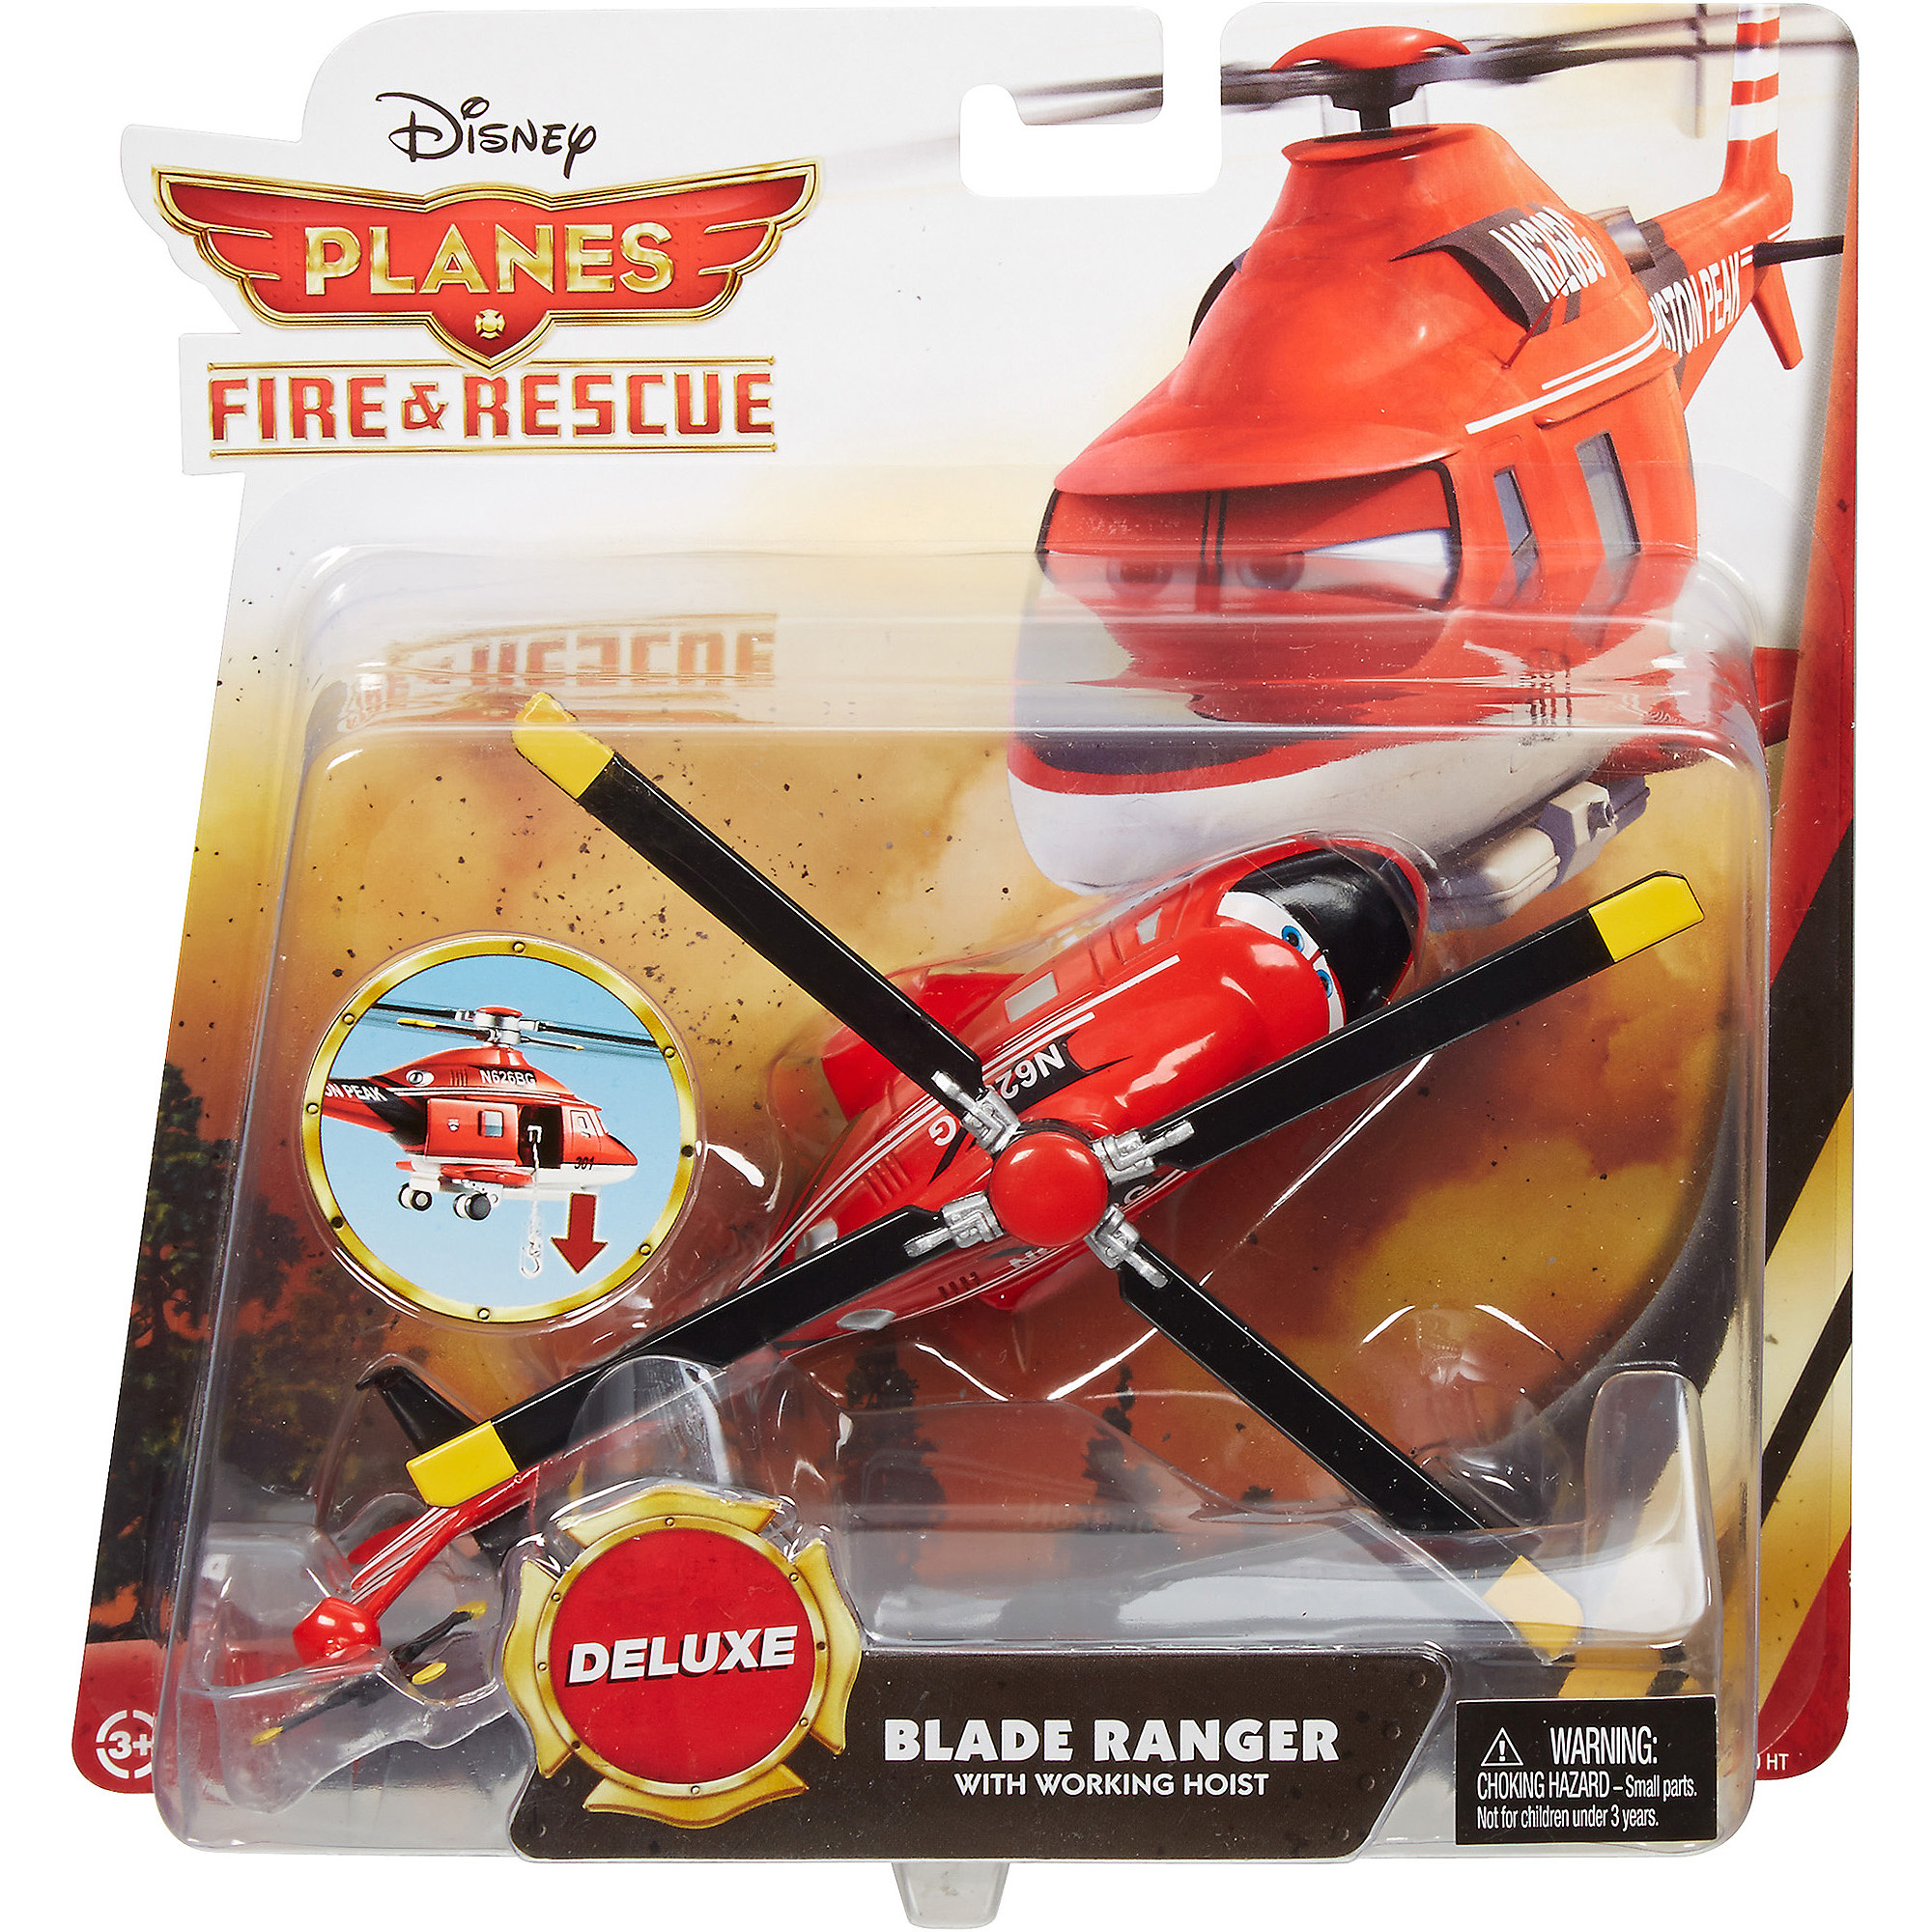 Disney Planes Fire & Rescue Blade Ranger - image 3 of 3